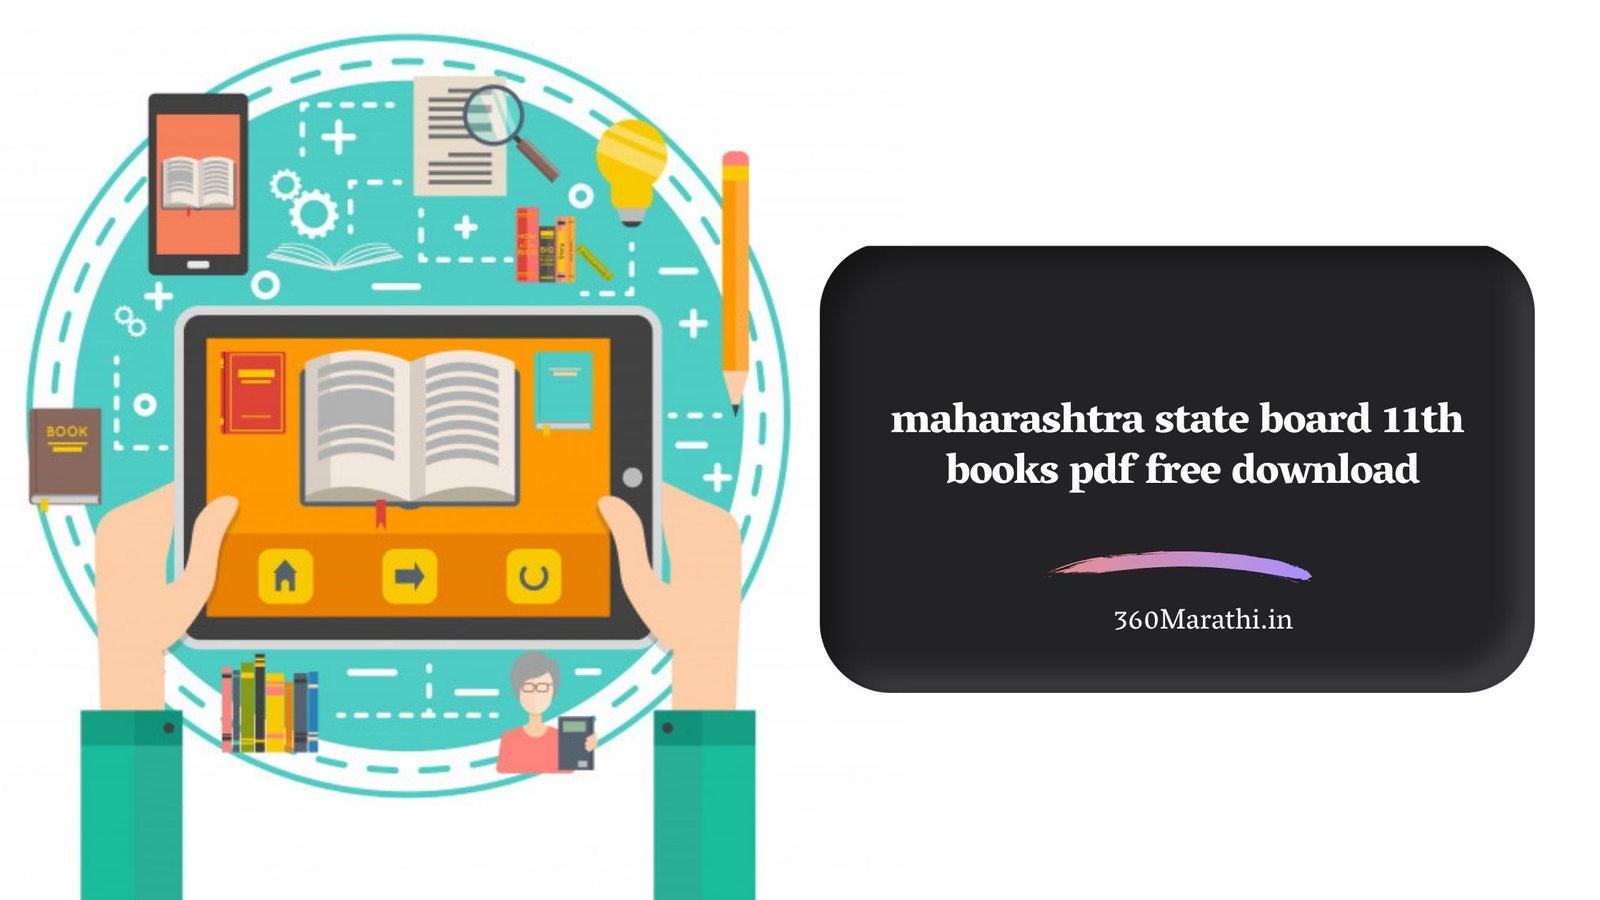 maharashtra state board 11th books pdf free download